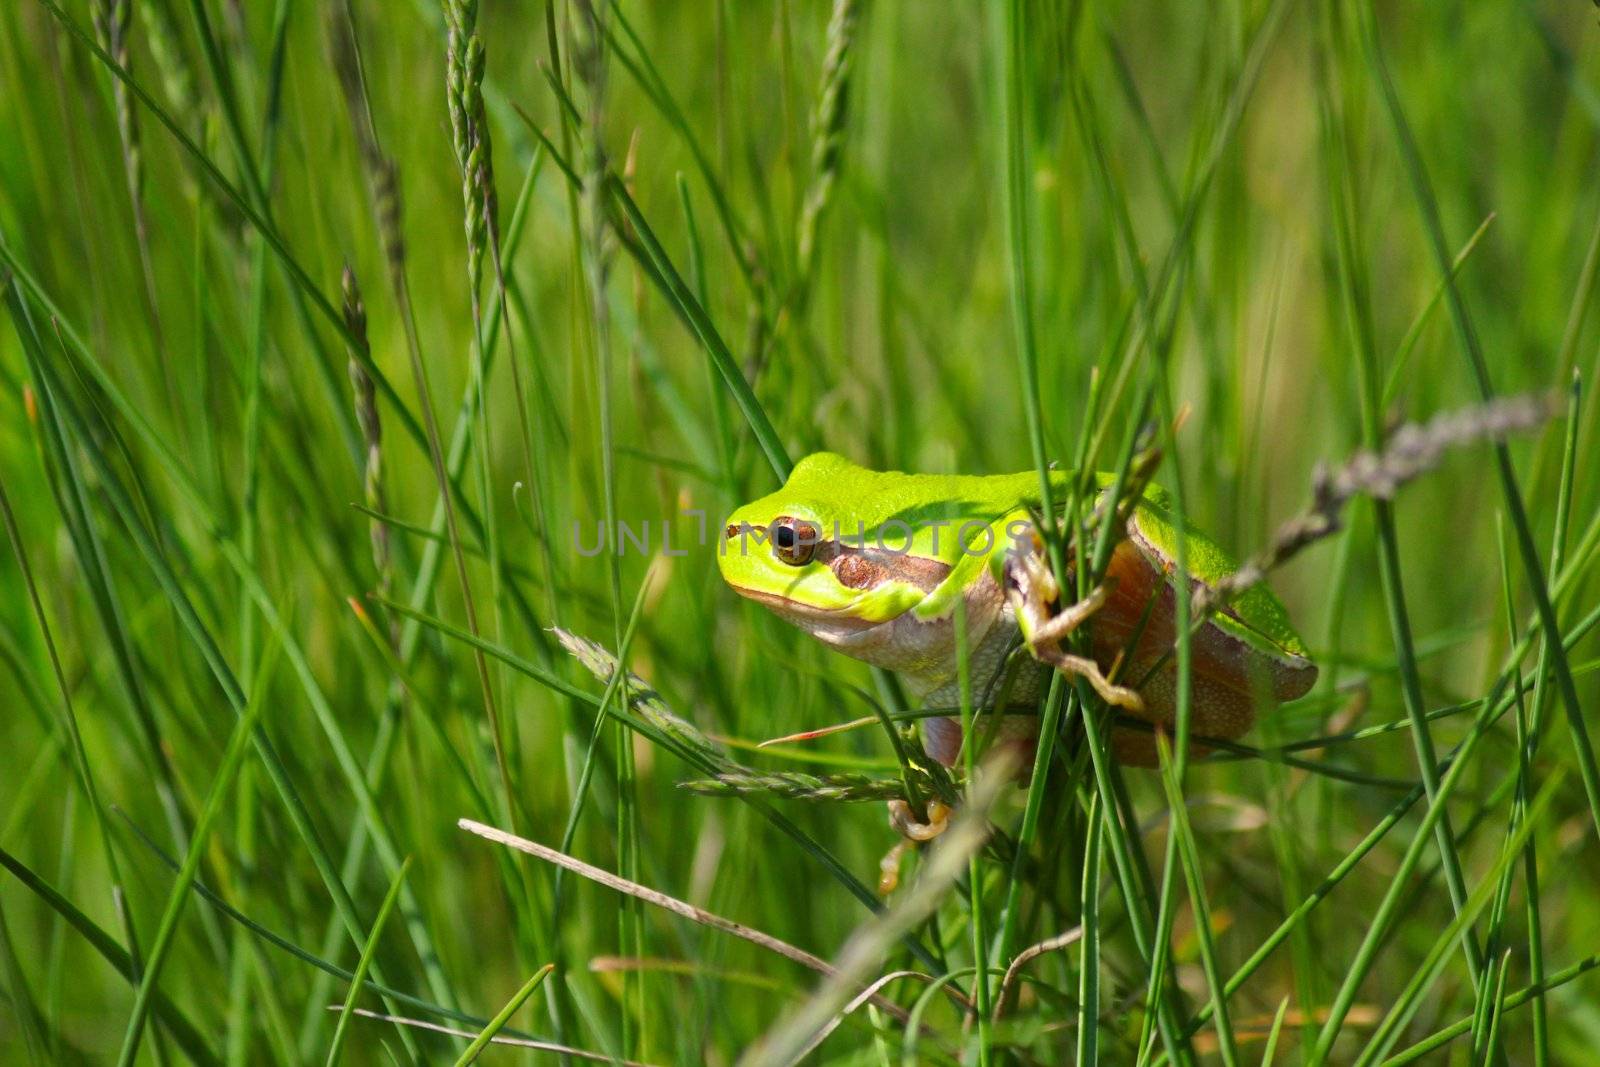 green tree frog climb on grass